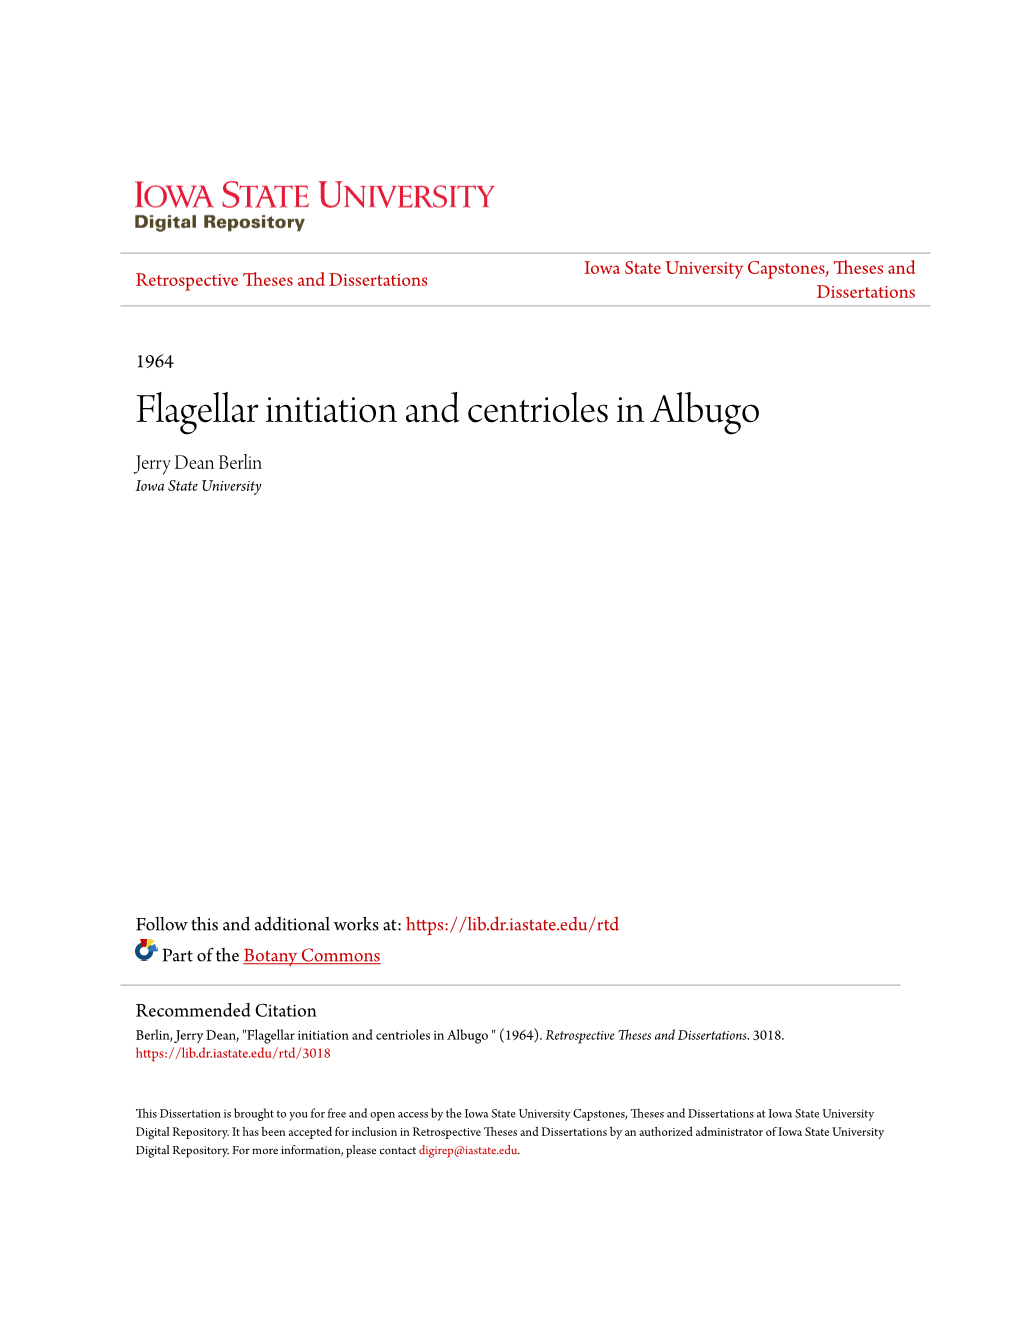 Flagellar Initiation and Centrioles in Albugo Jerry Dean Berlin Iowa State University